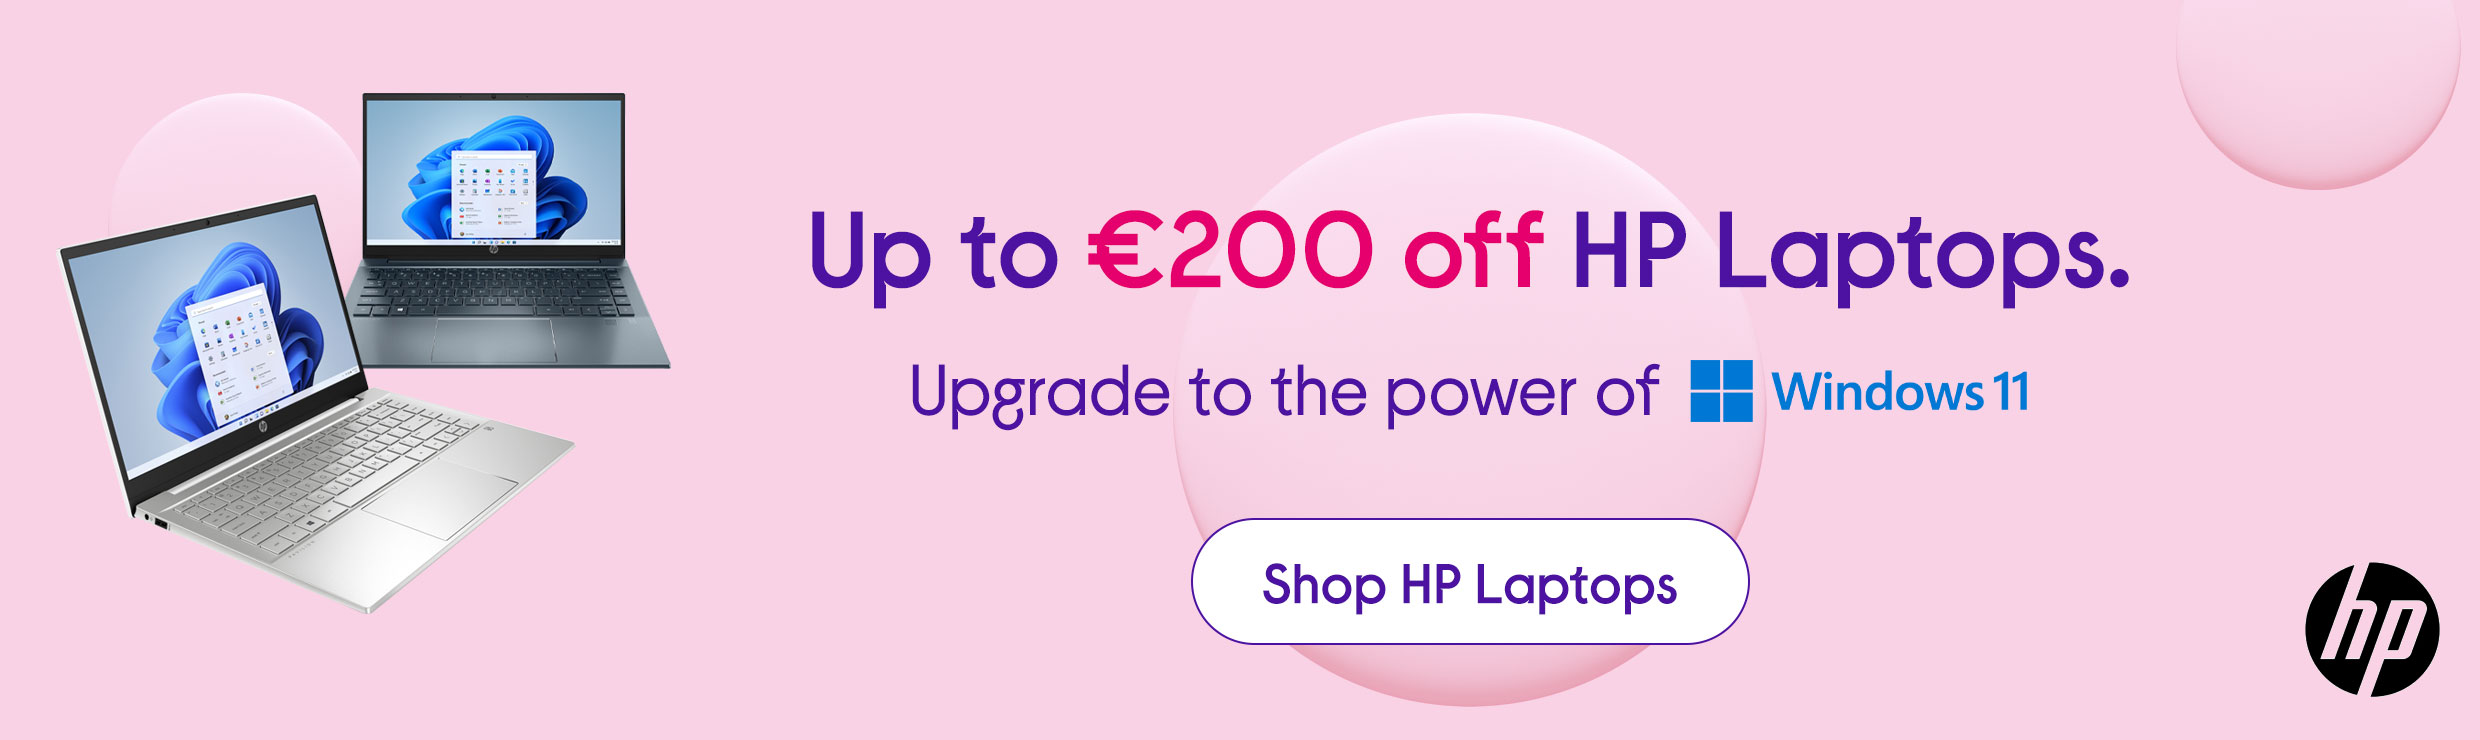 HP Laptop Mega Deals at Currys